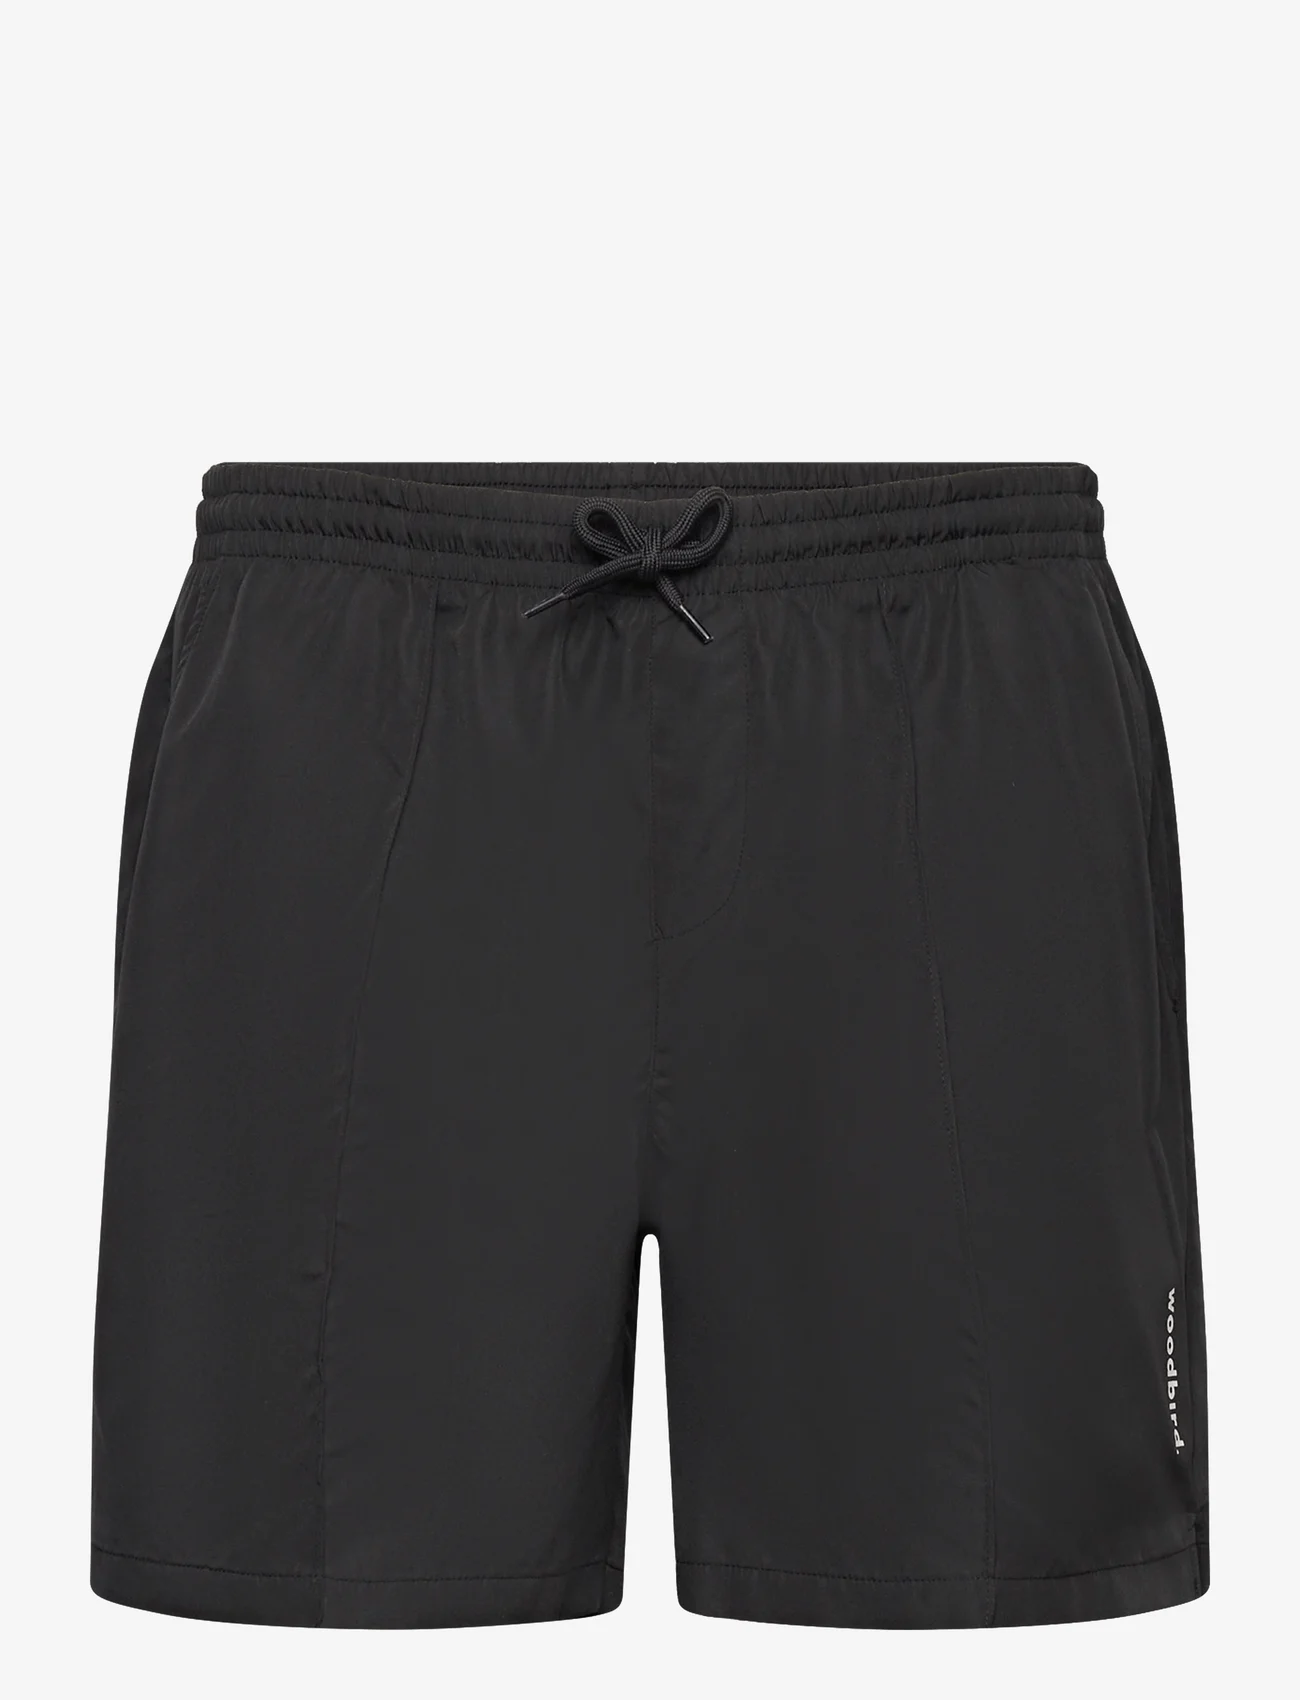 Woodbird - Bommy Swim Shorts - swim shorts - black - 0